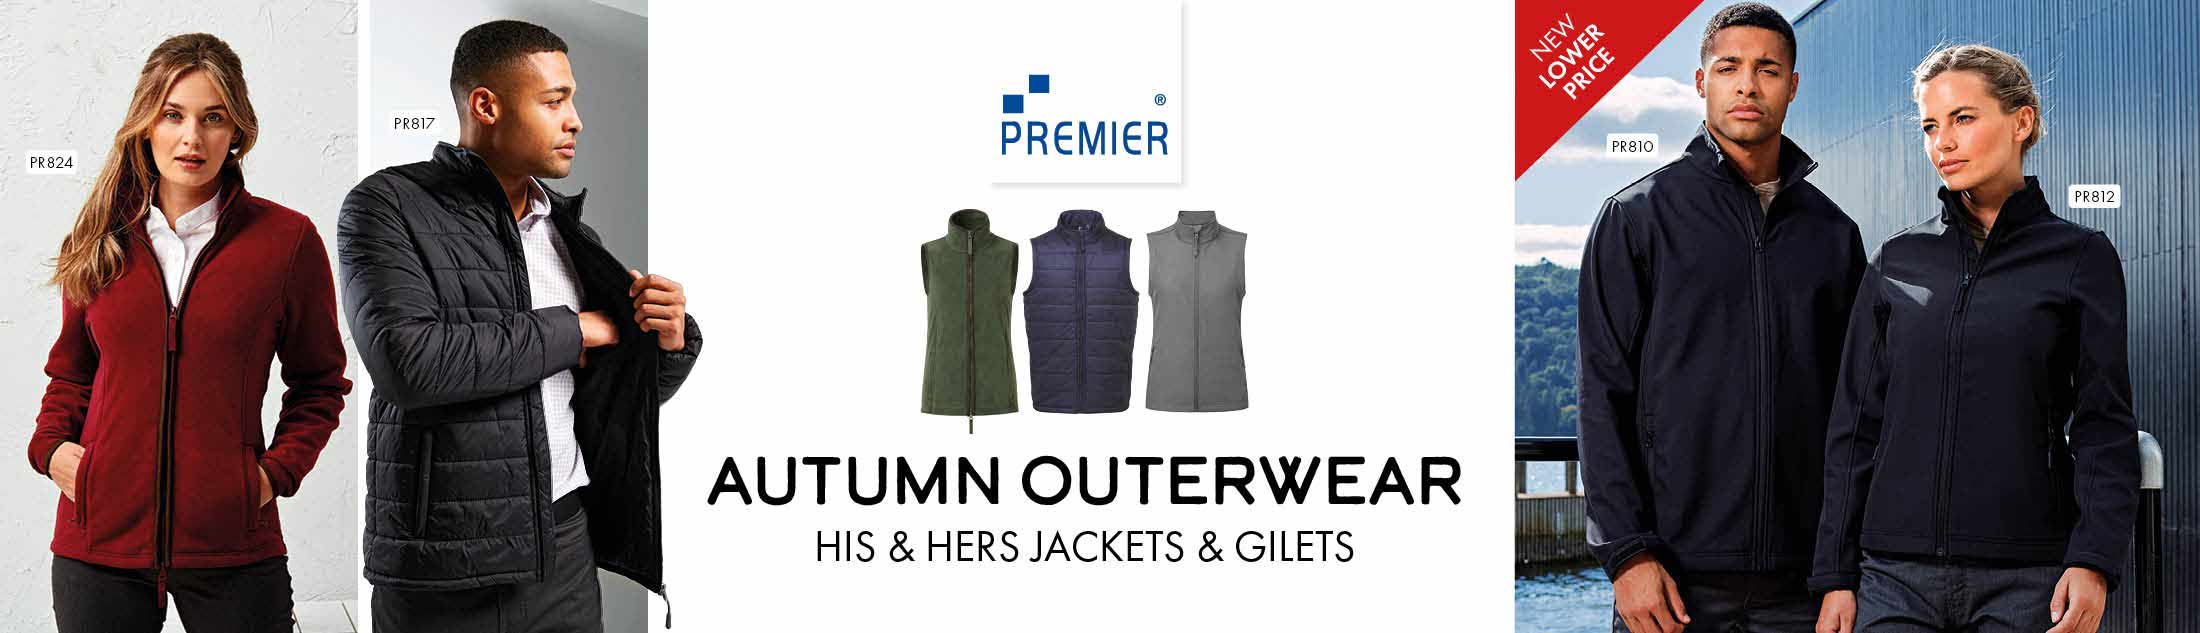 Premier outerwear for Autumn